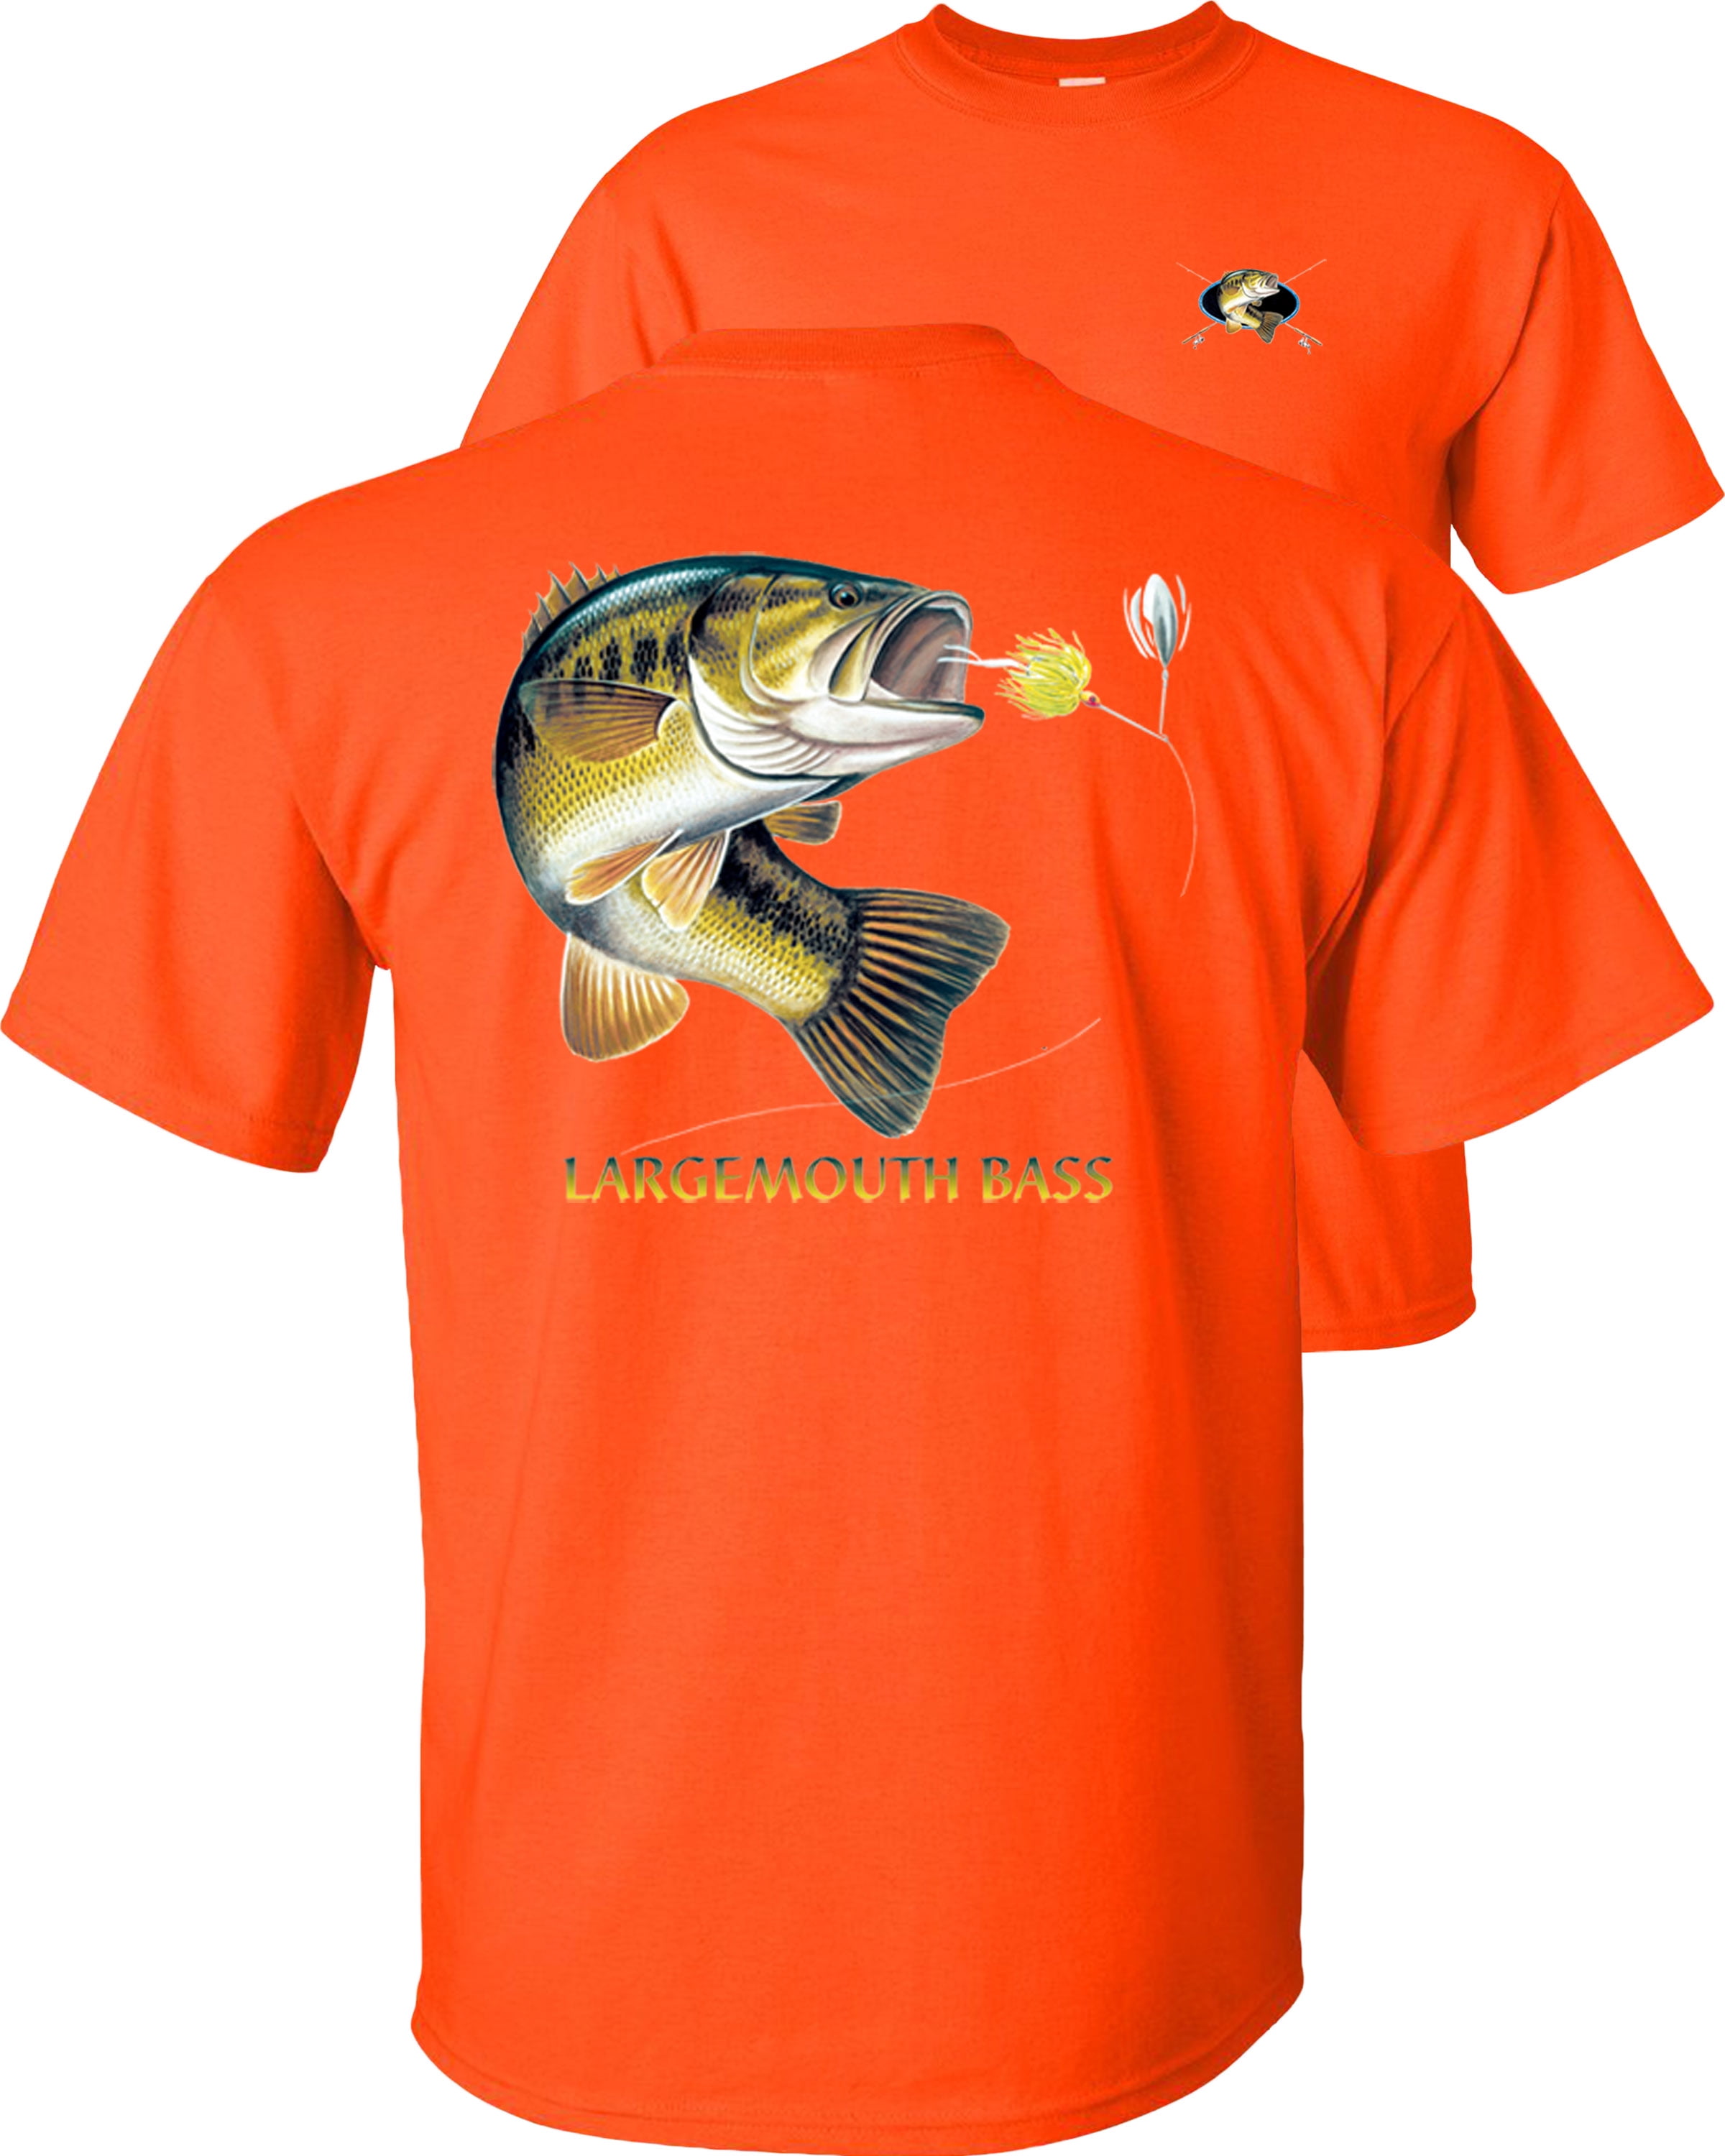 Fair Game Largemouth Bass T-Shirt, combination profile, Fishing